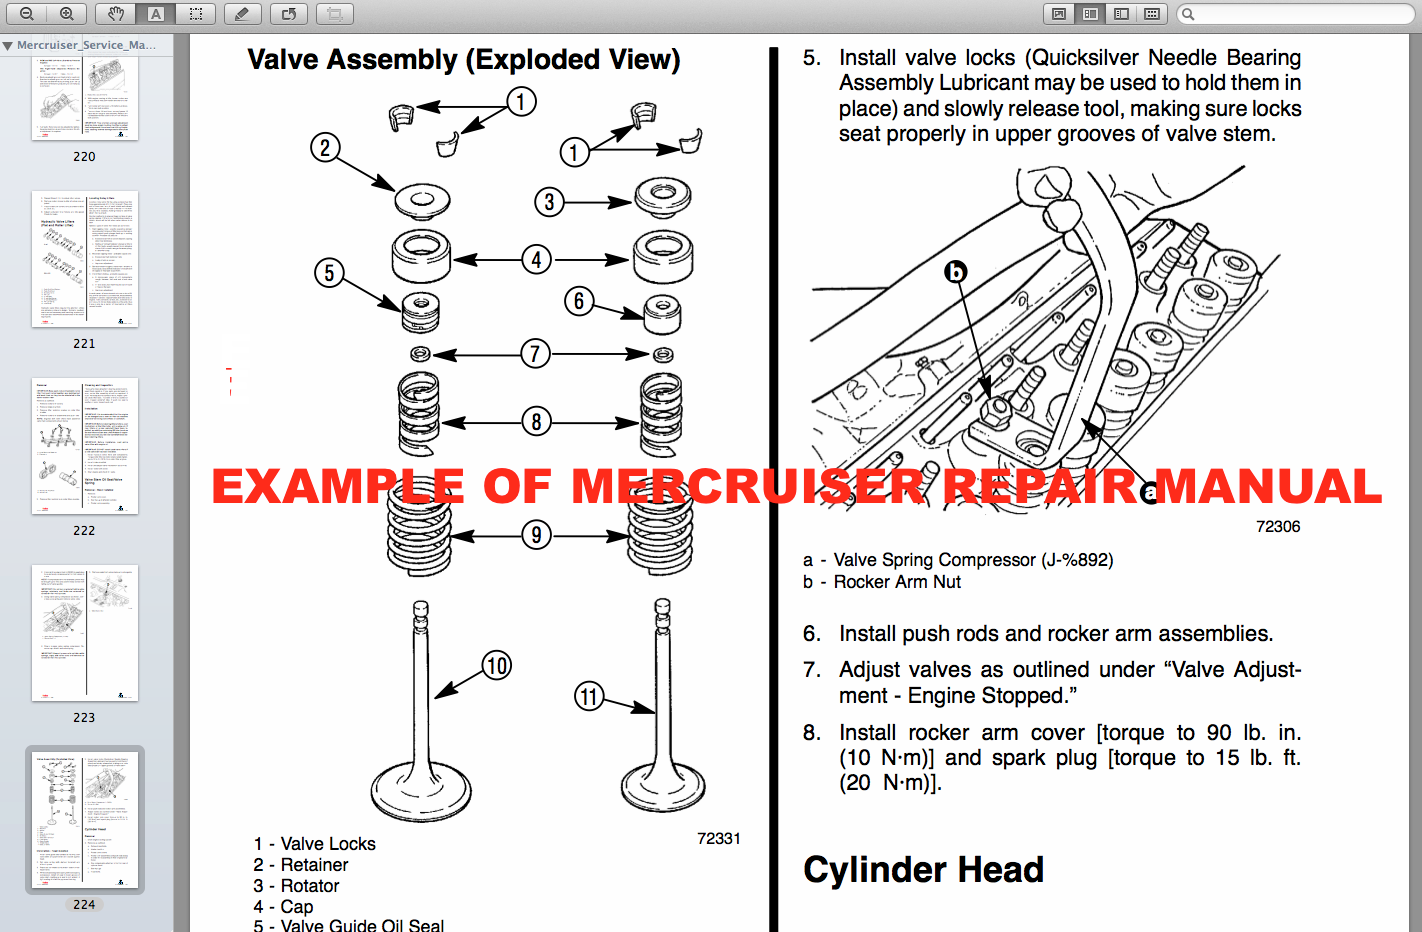 Download MerCruiser Factory Service Manual online free pdf guide